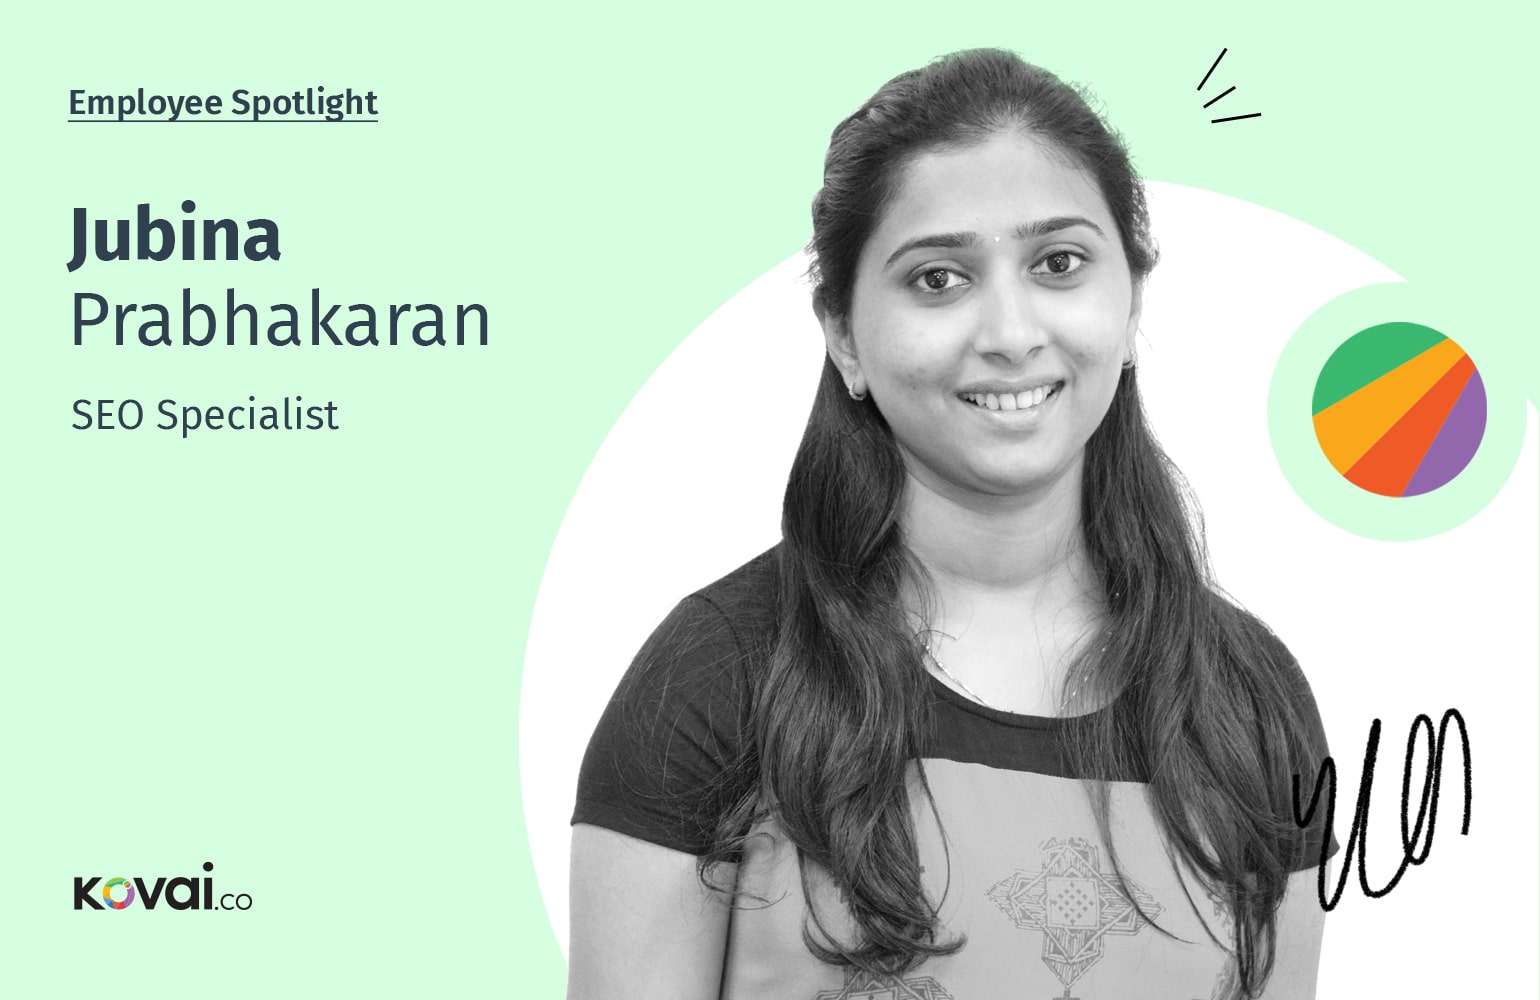 Jubina Prabhakaran: Employee Spotlight